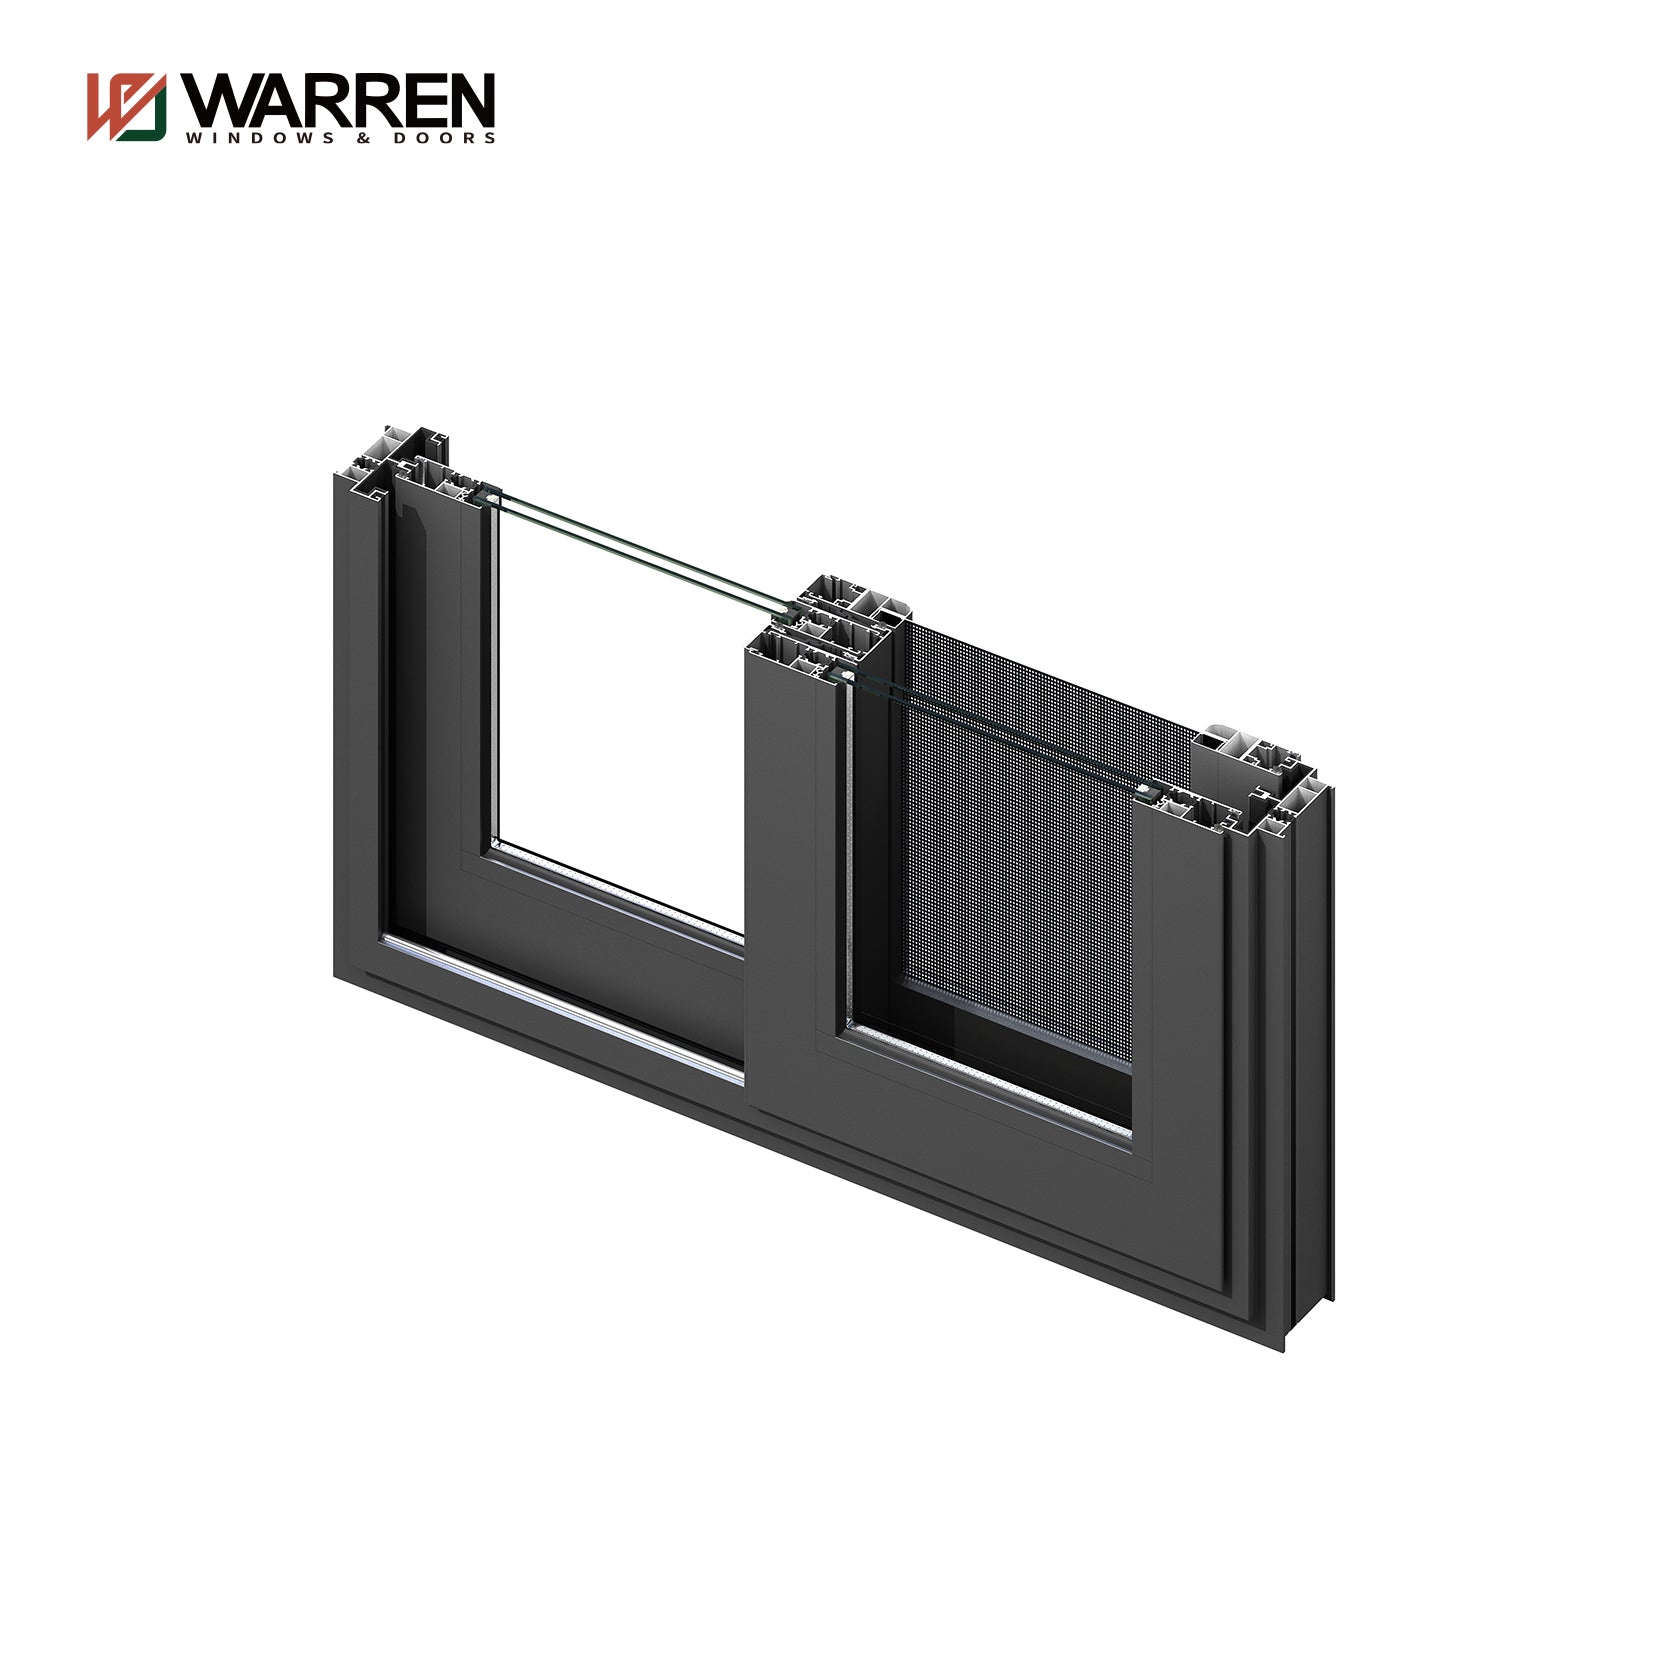 Warren Selling New Products Aluminum Bathroom Windows Simple Design Aluminum Sliding Window